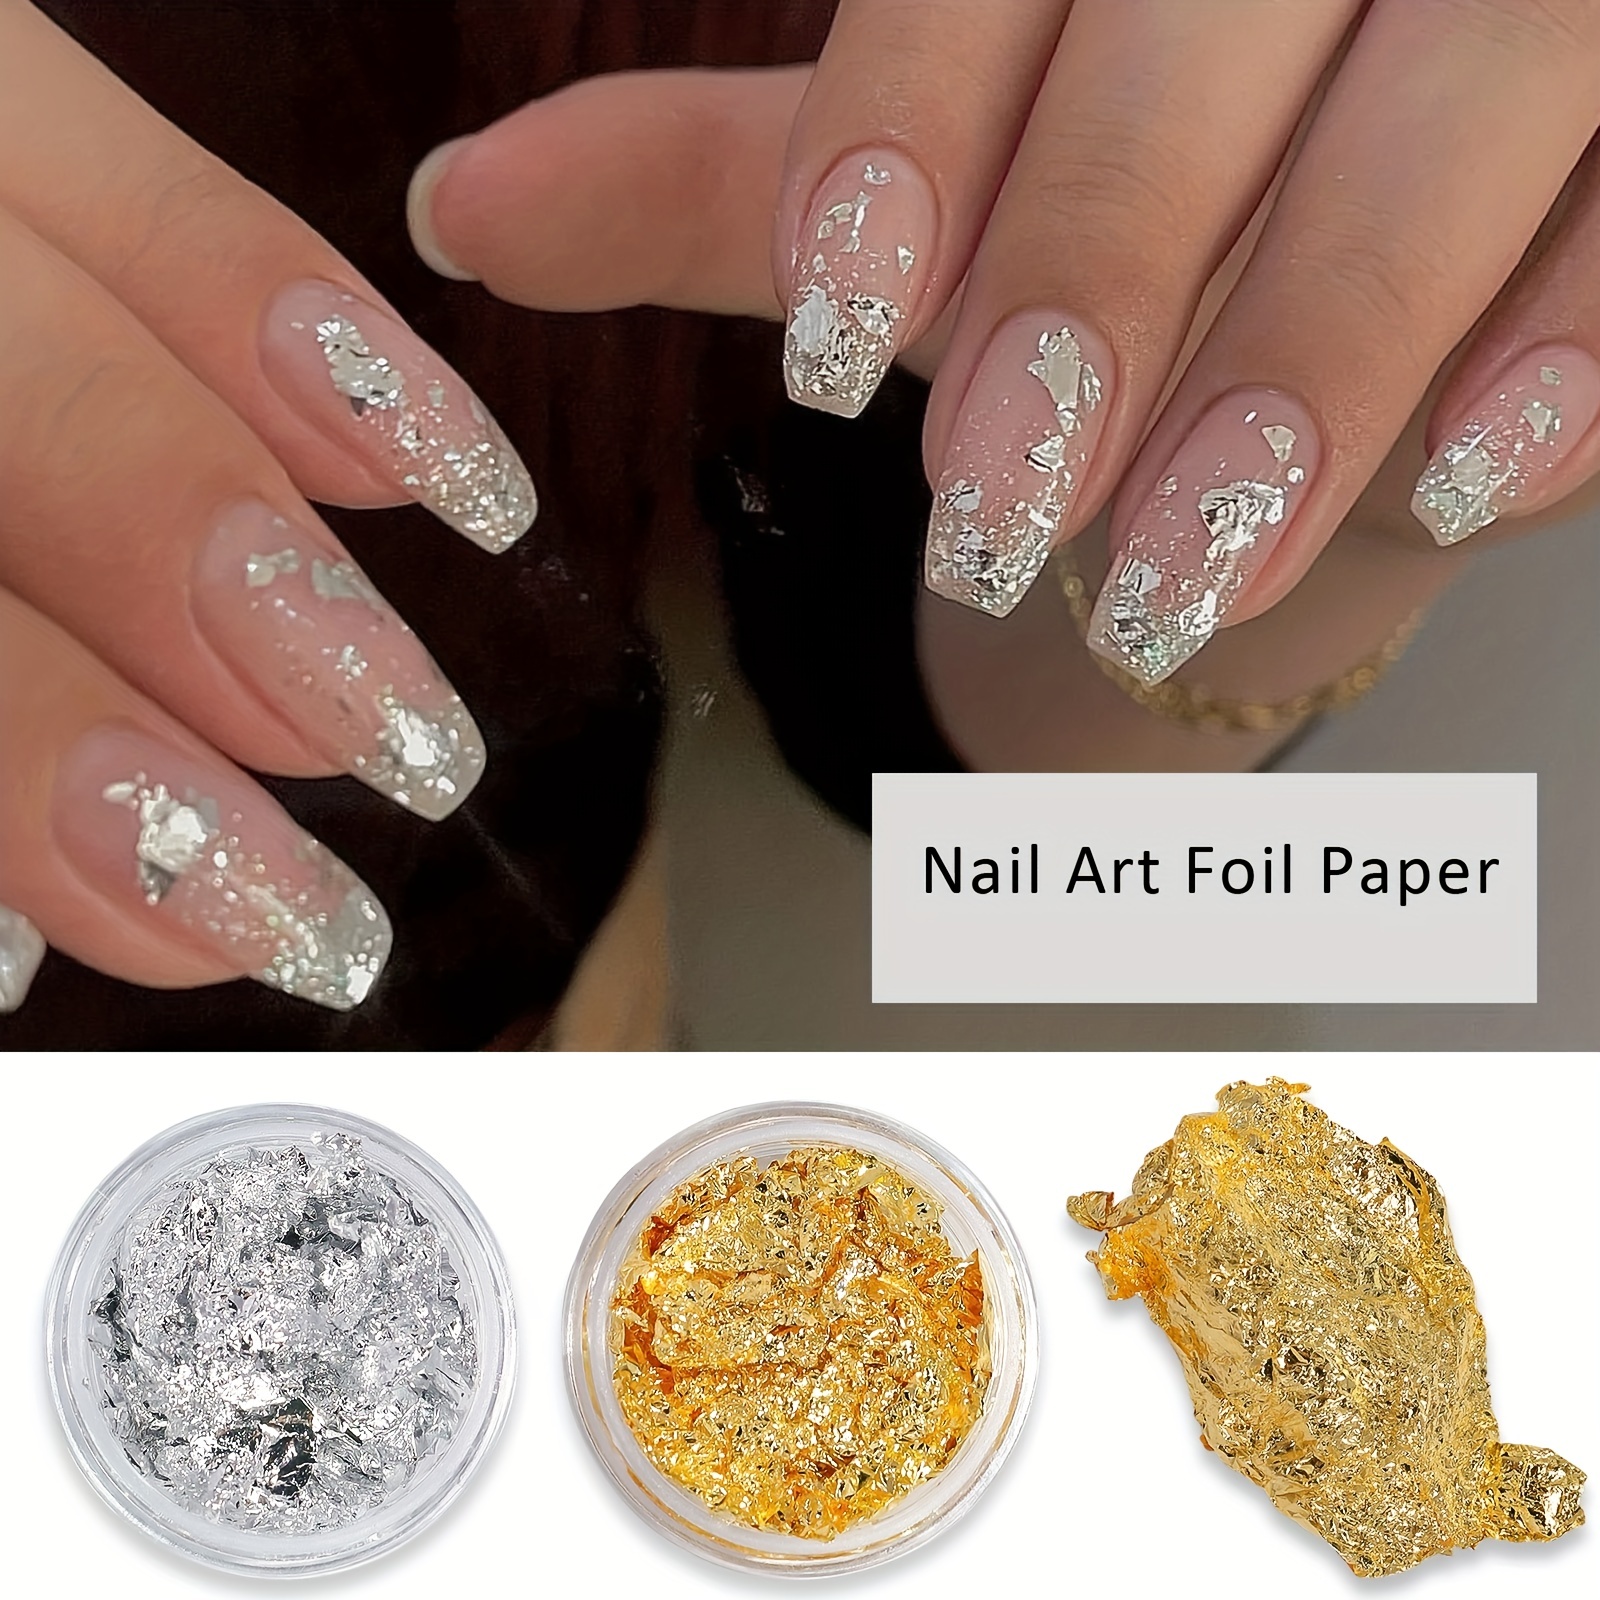 Nail Art Foil Paper